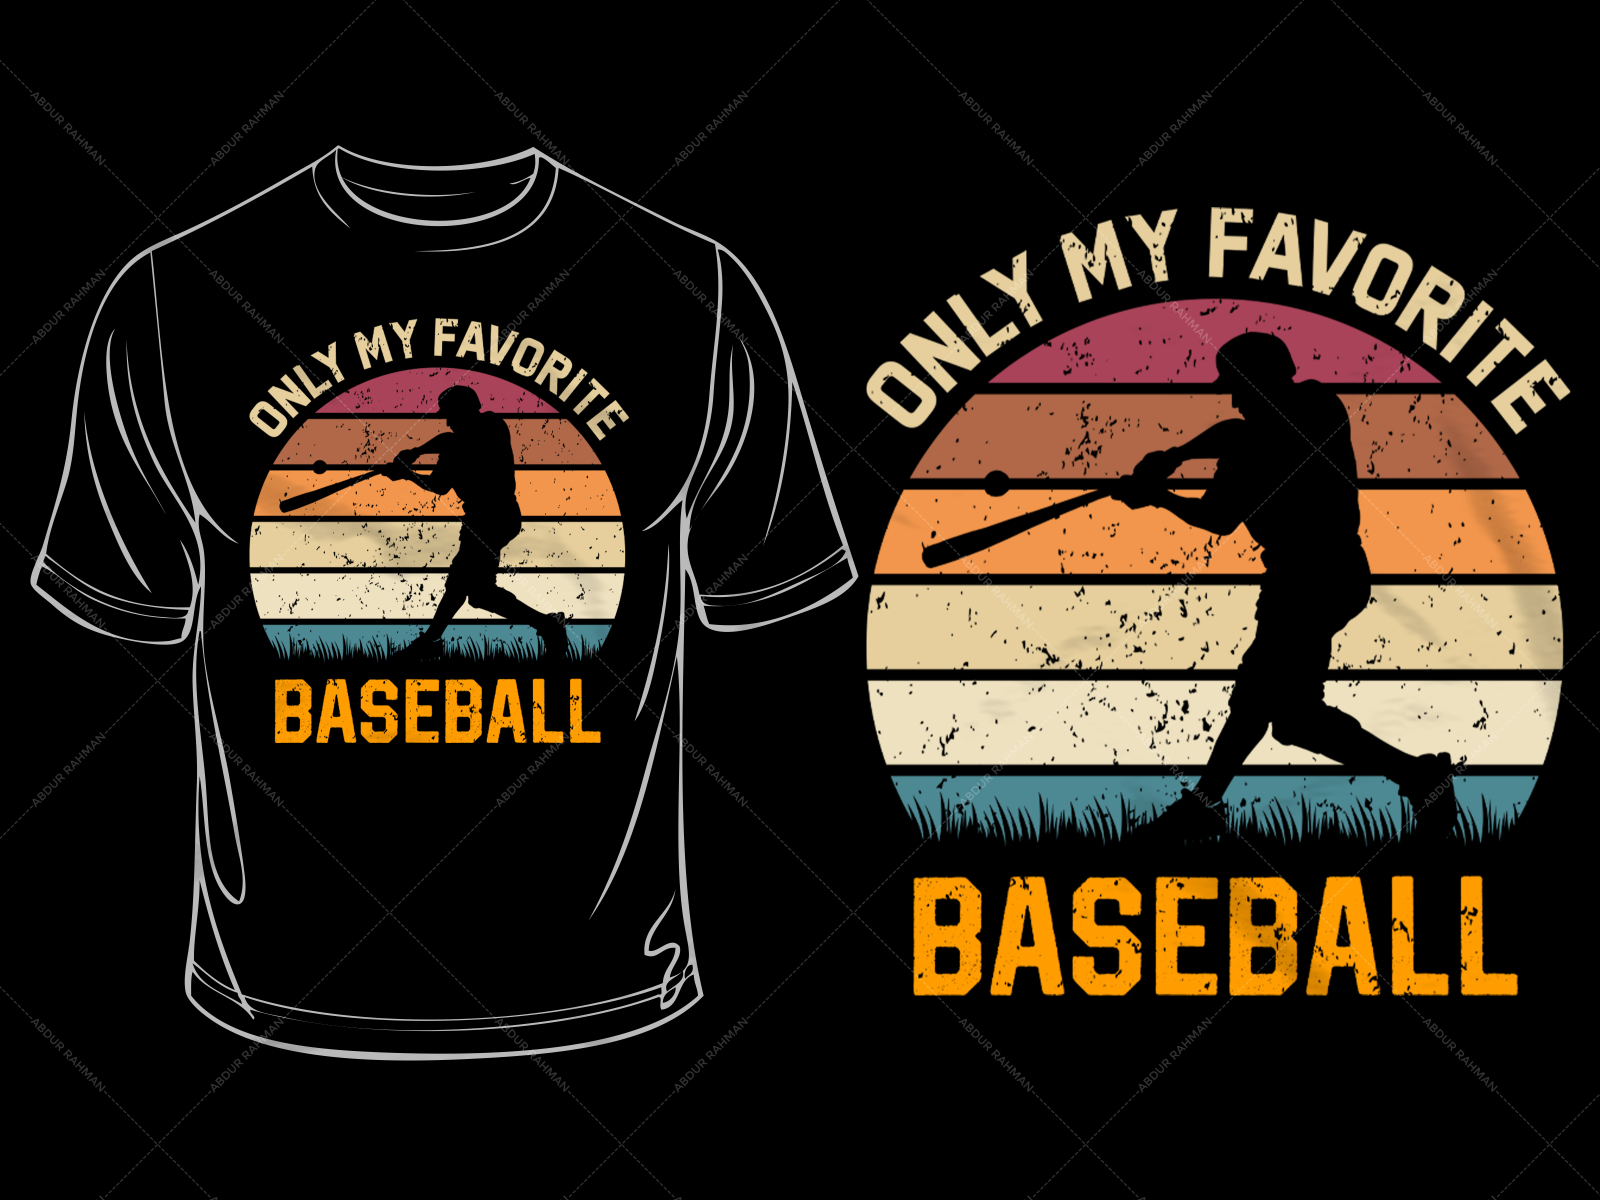 Baseball Player Typography T-Shirt Design by T-Shirt Design Bundle on ...